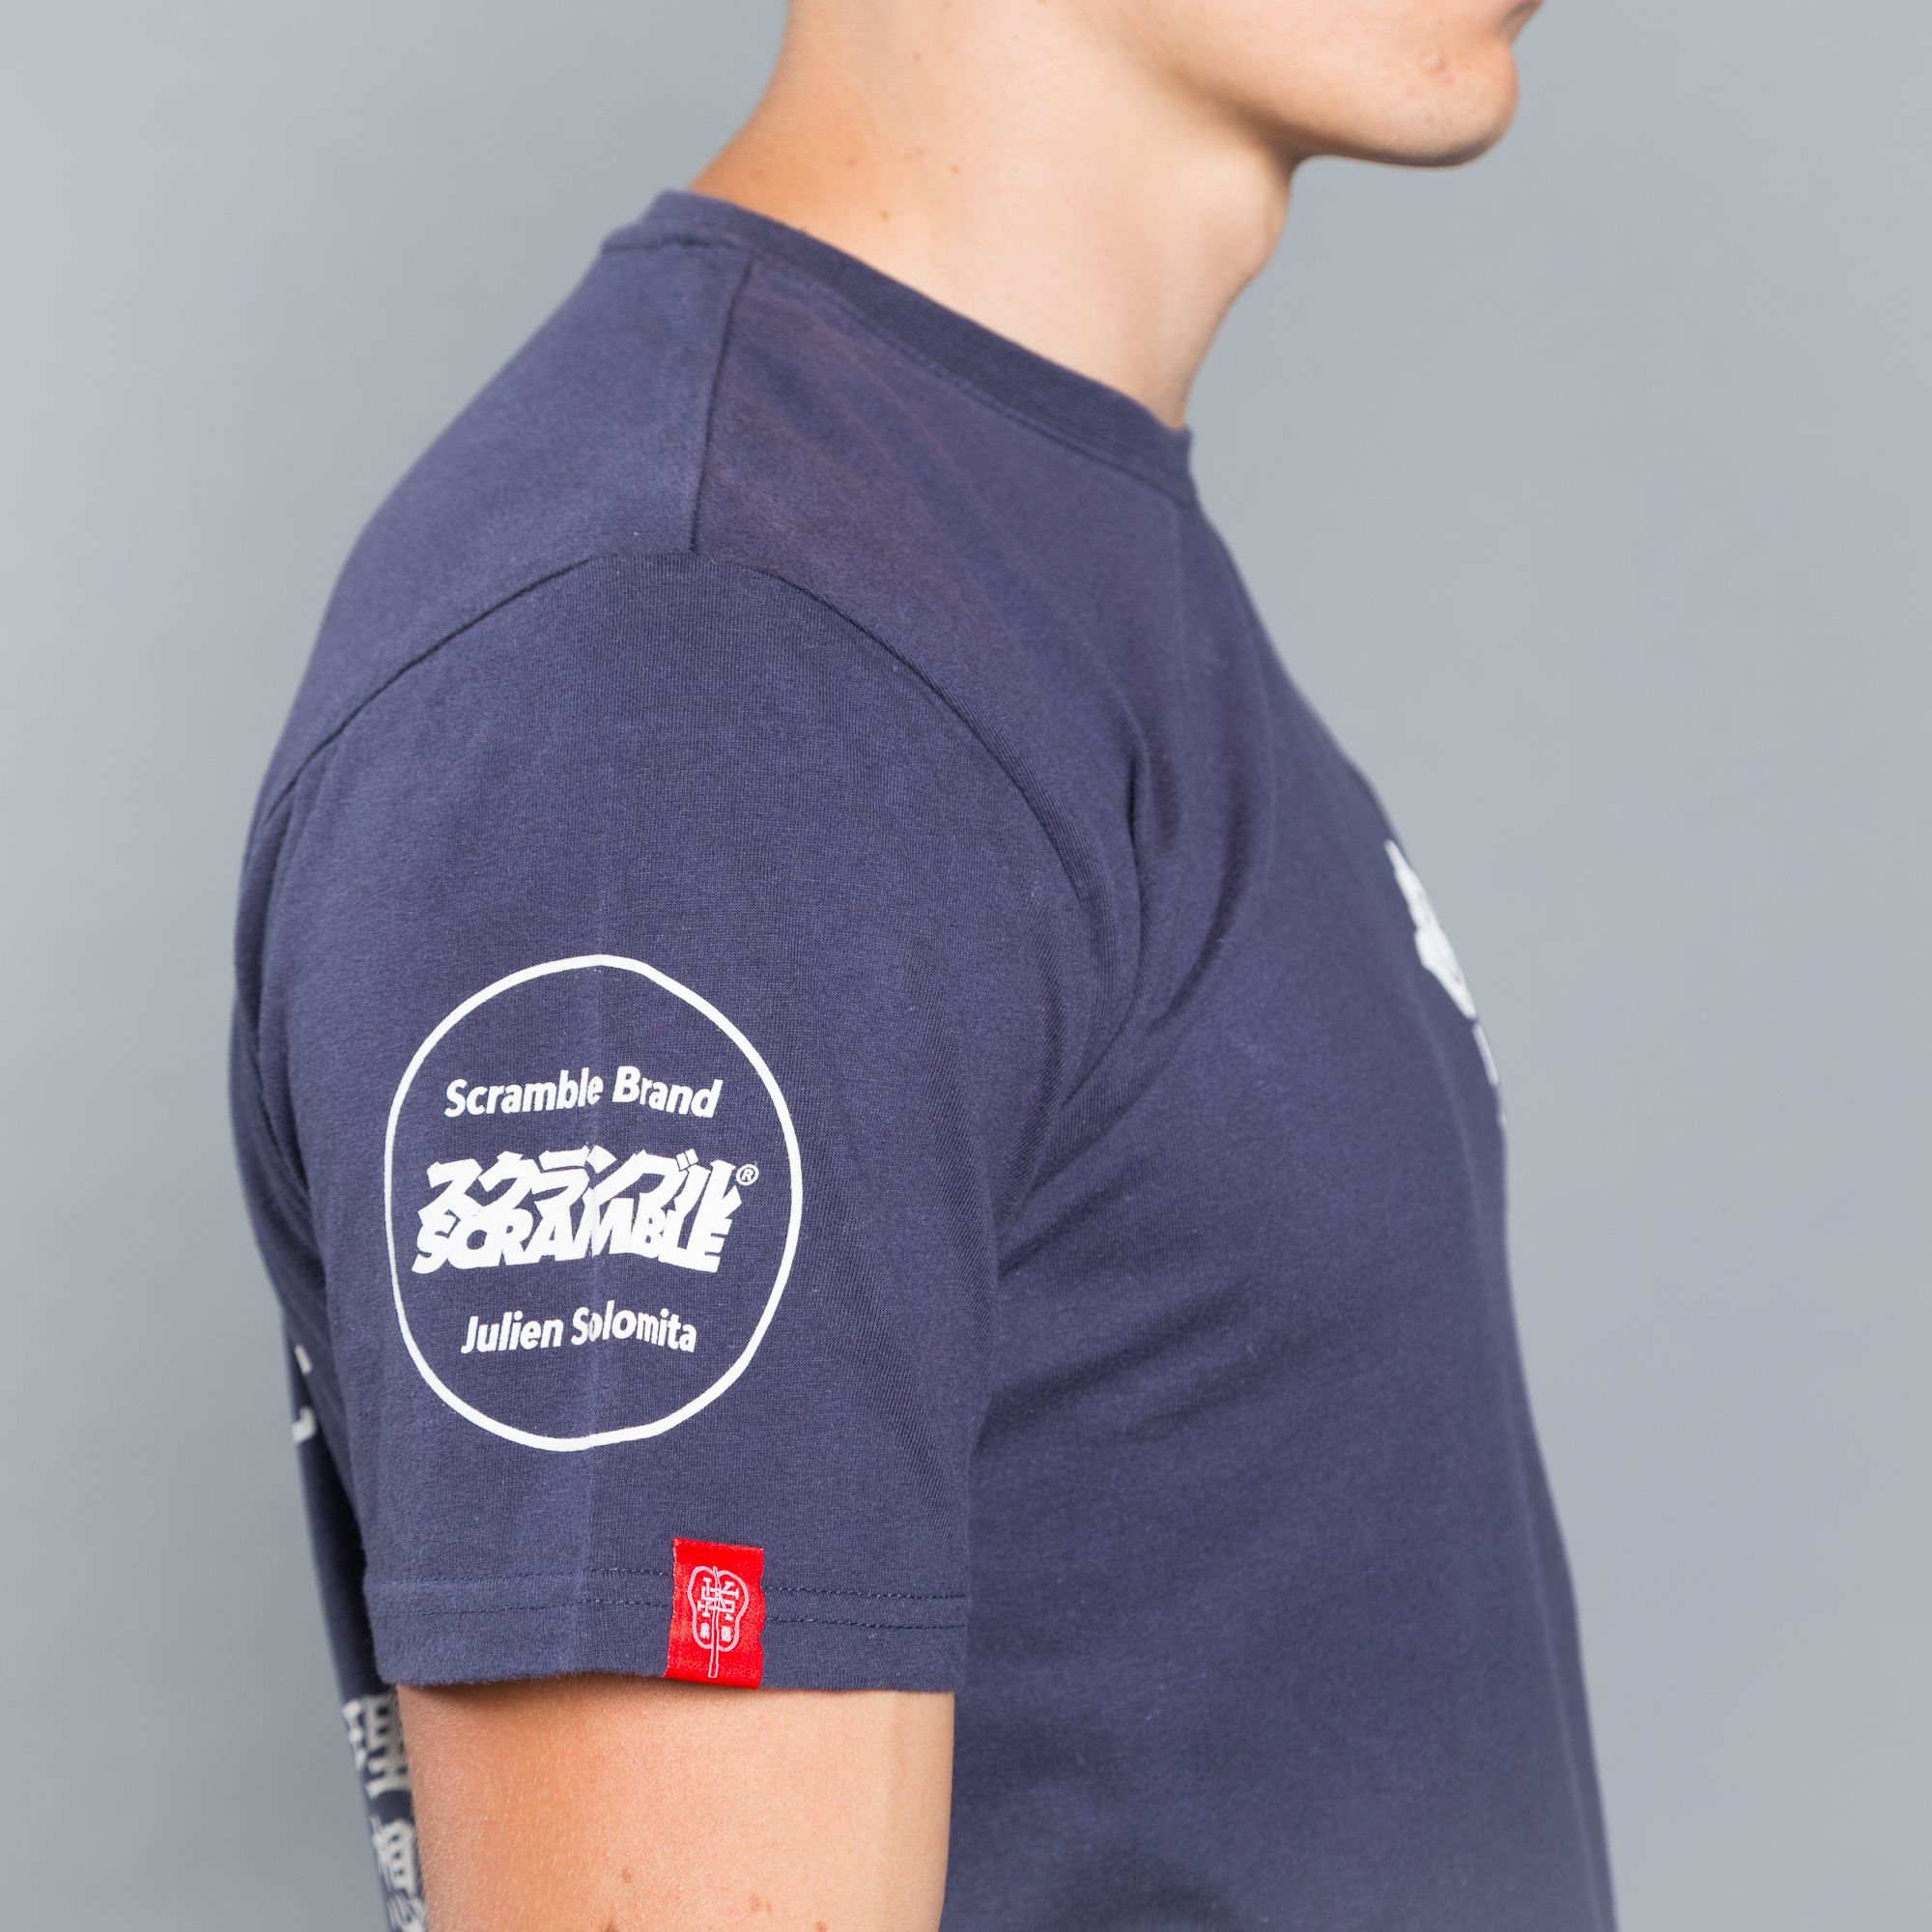 Scramble x Julien Solomita - Clouds T-Shirt Scramble Brand